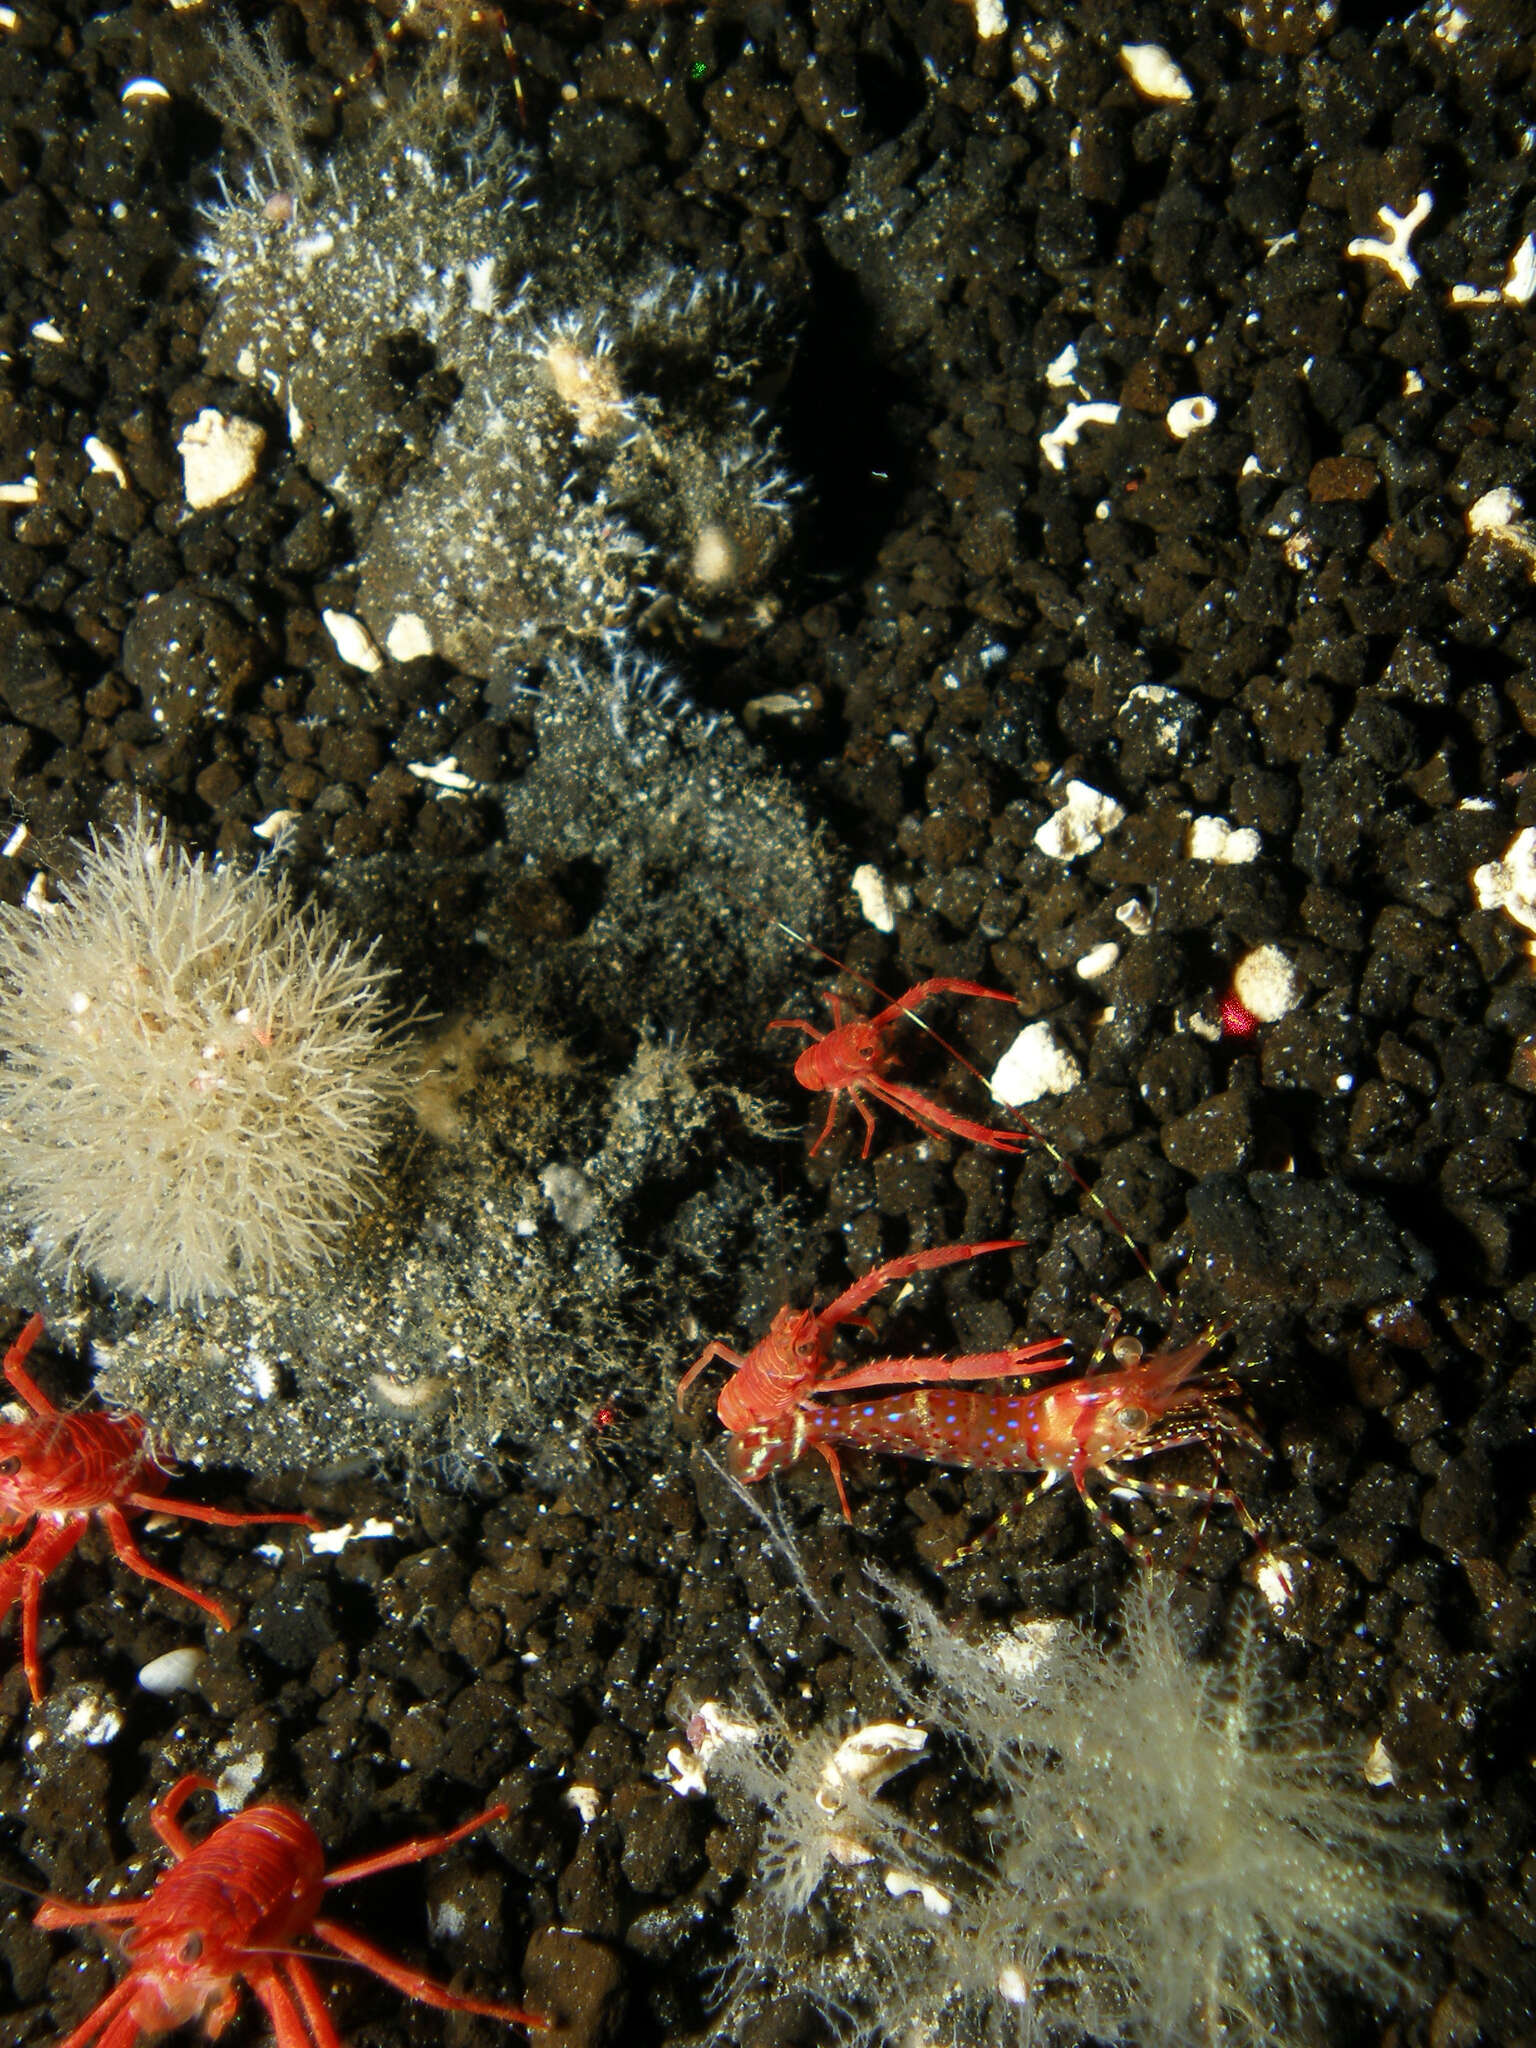 Image of roughpatch shrimp